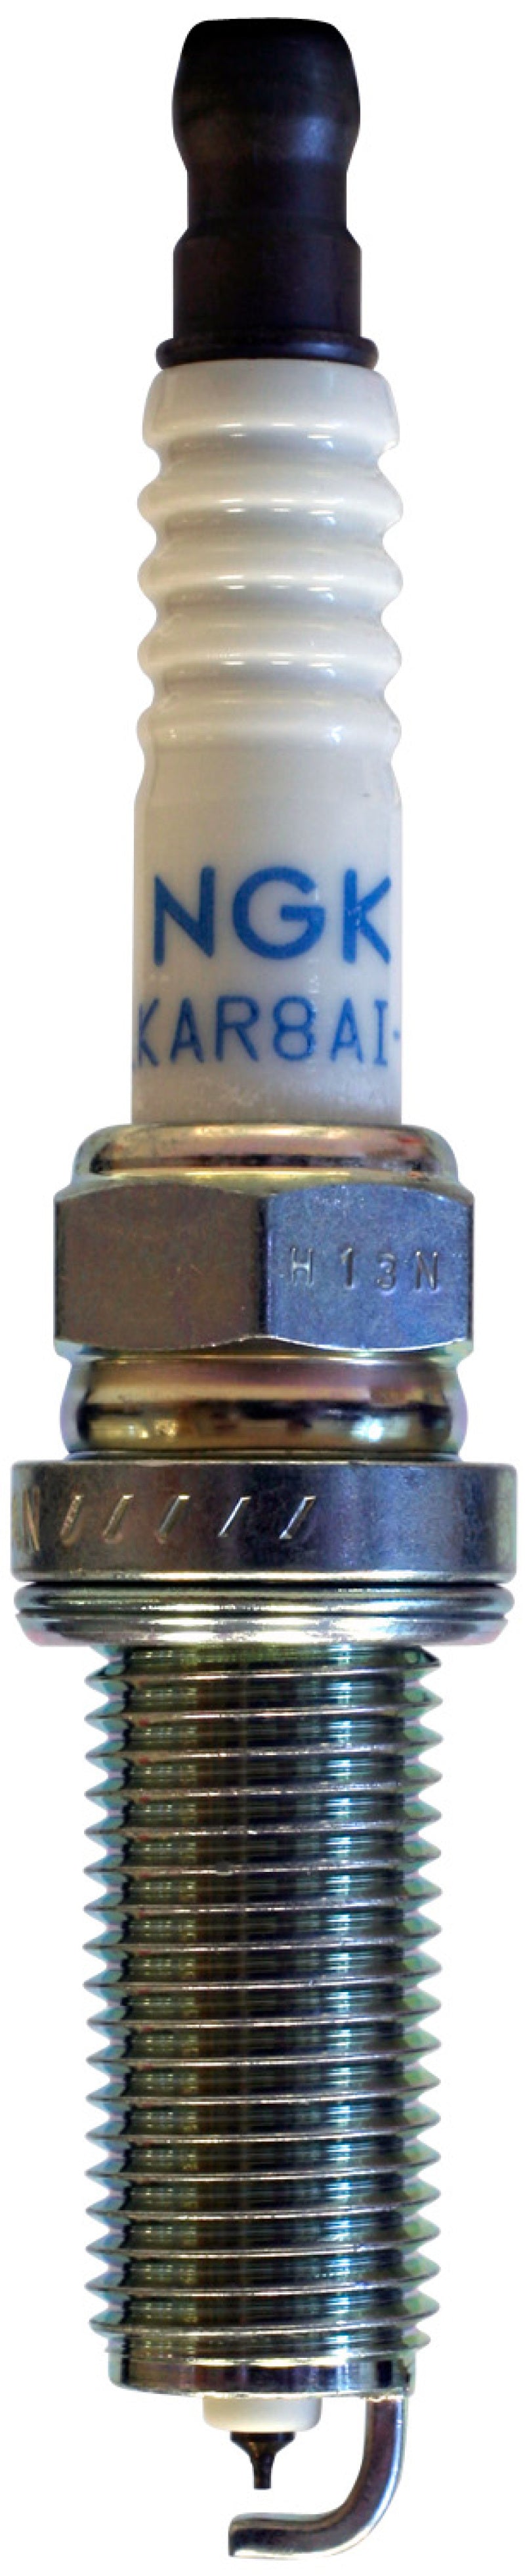 NGK Iridium Stock Spark Plug For LKAR8BI9 -  Shop now at Performance Car Parts